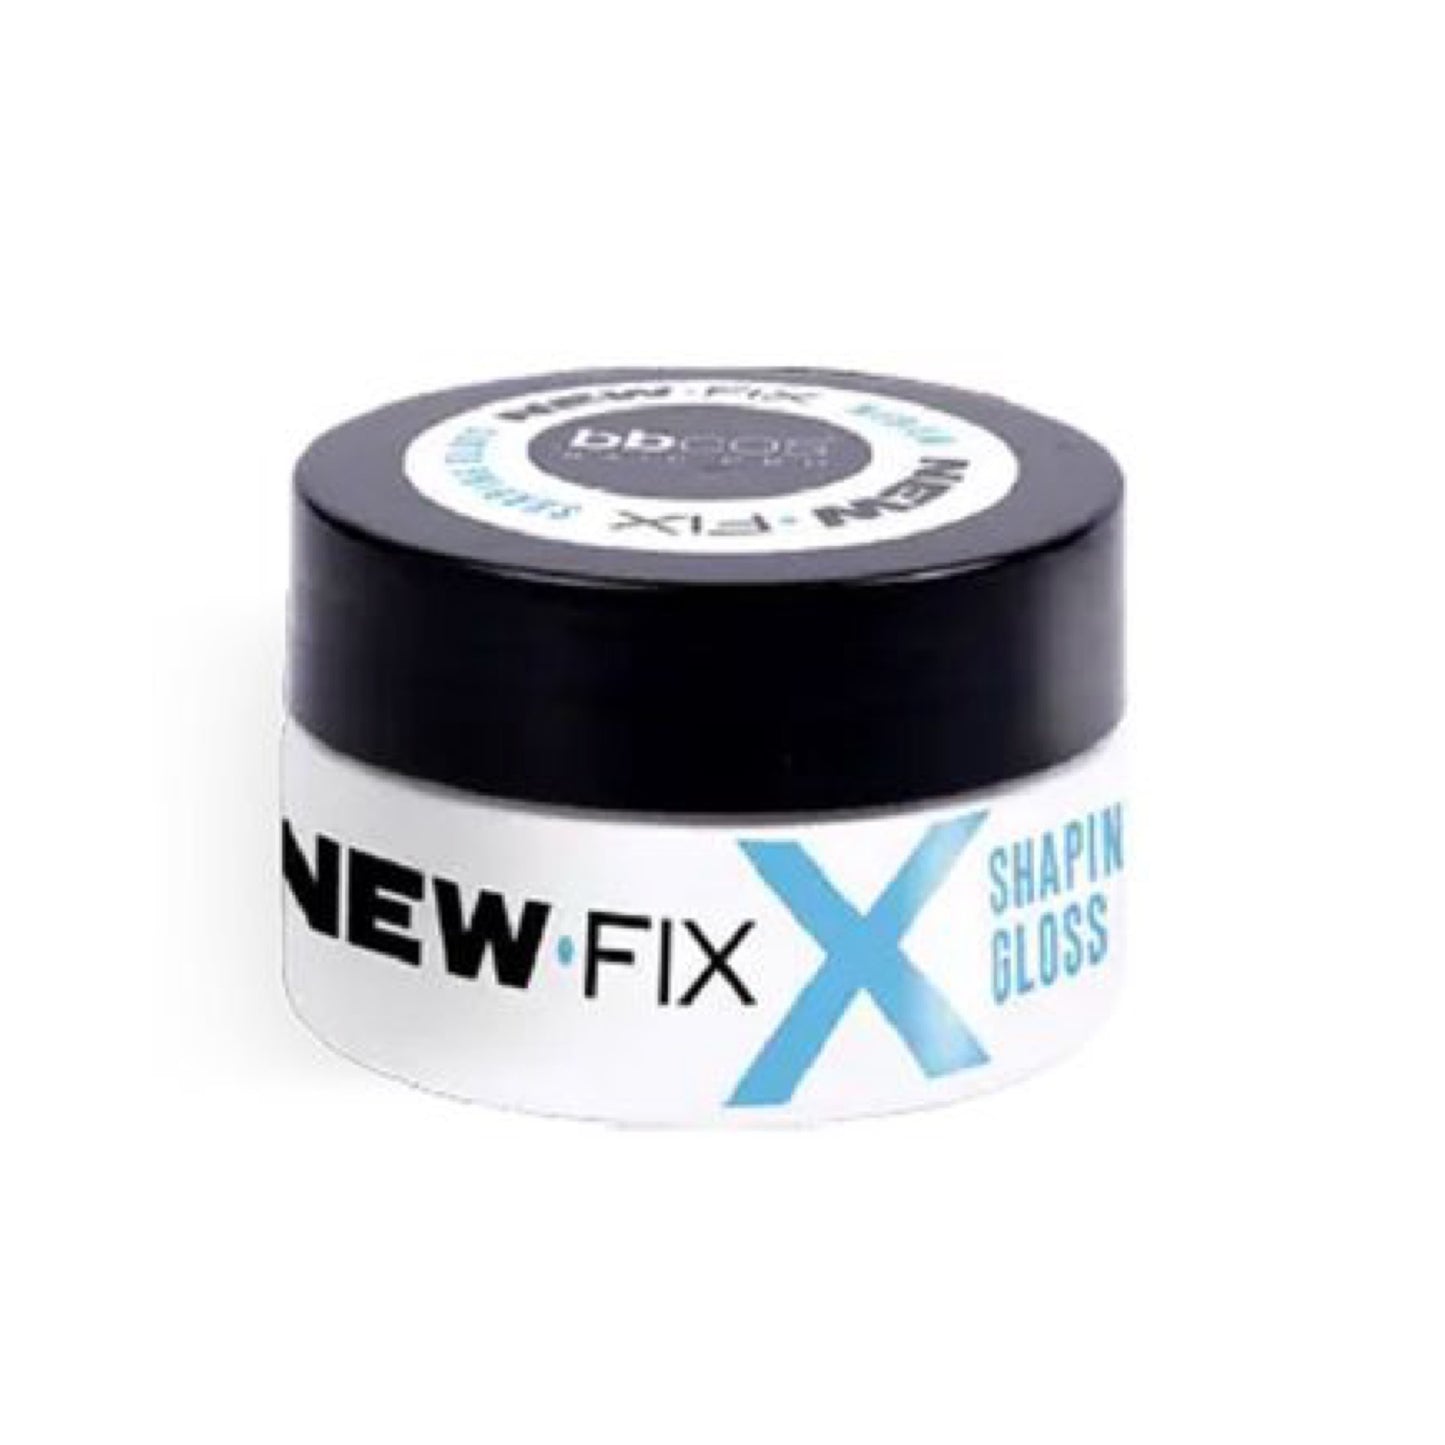 MHP - BBCOS New Fix Shaping Gloss Wax  (75ml)